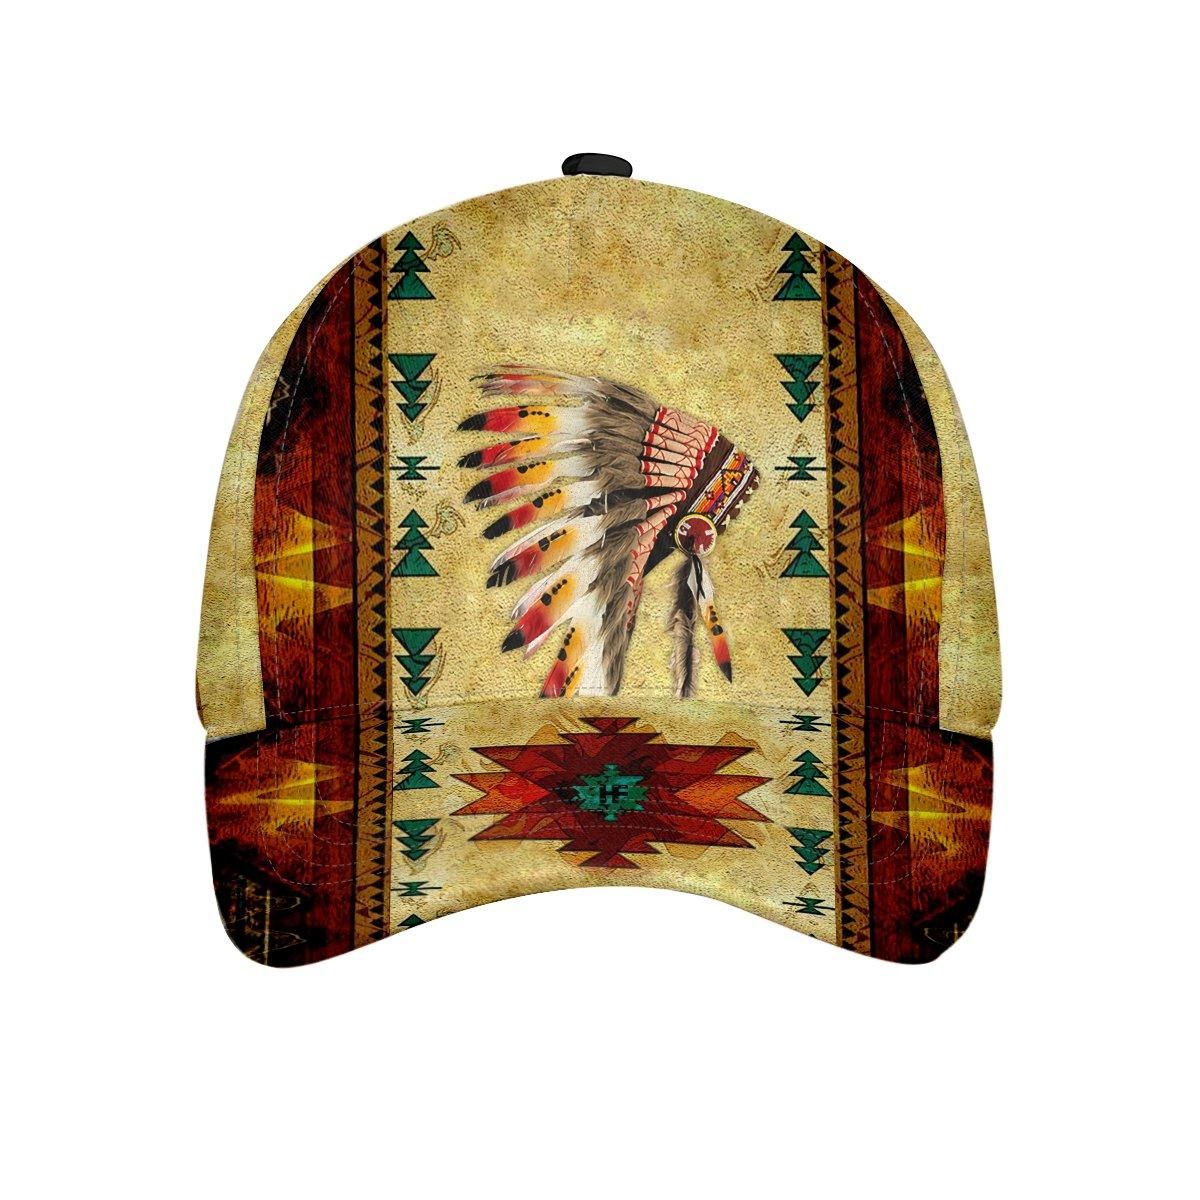 Native American Feather Cap